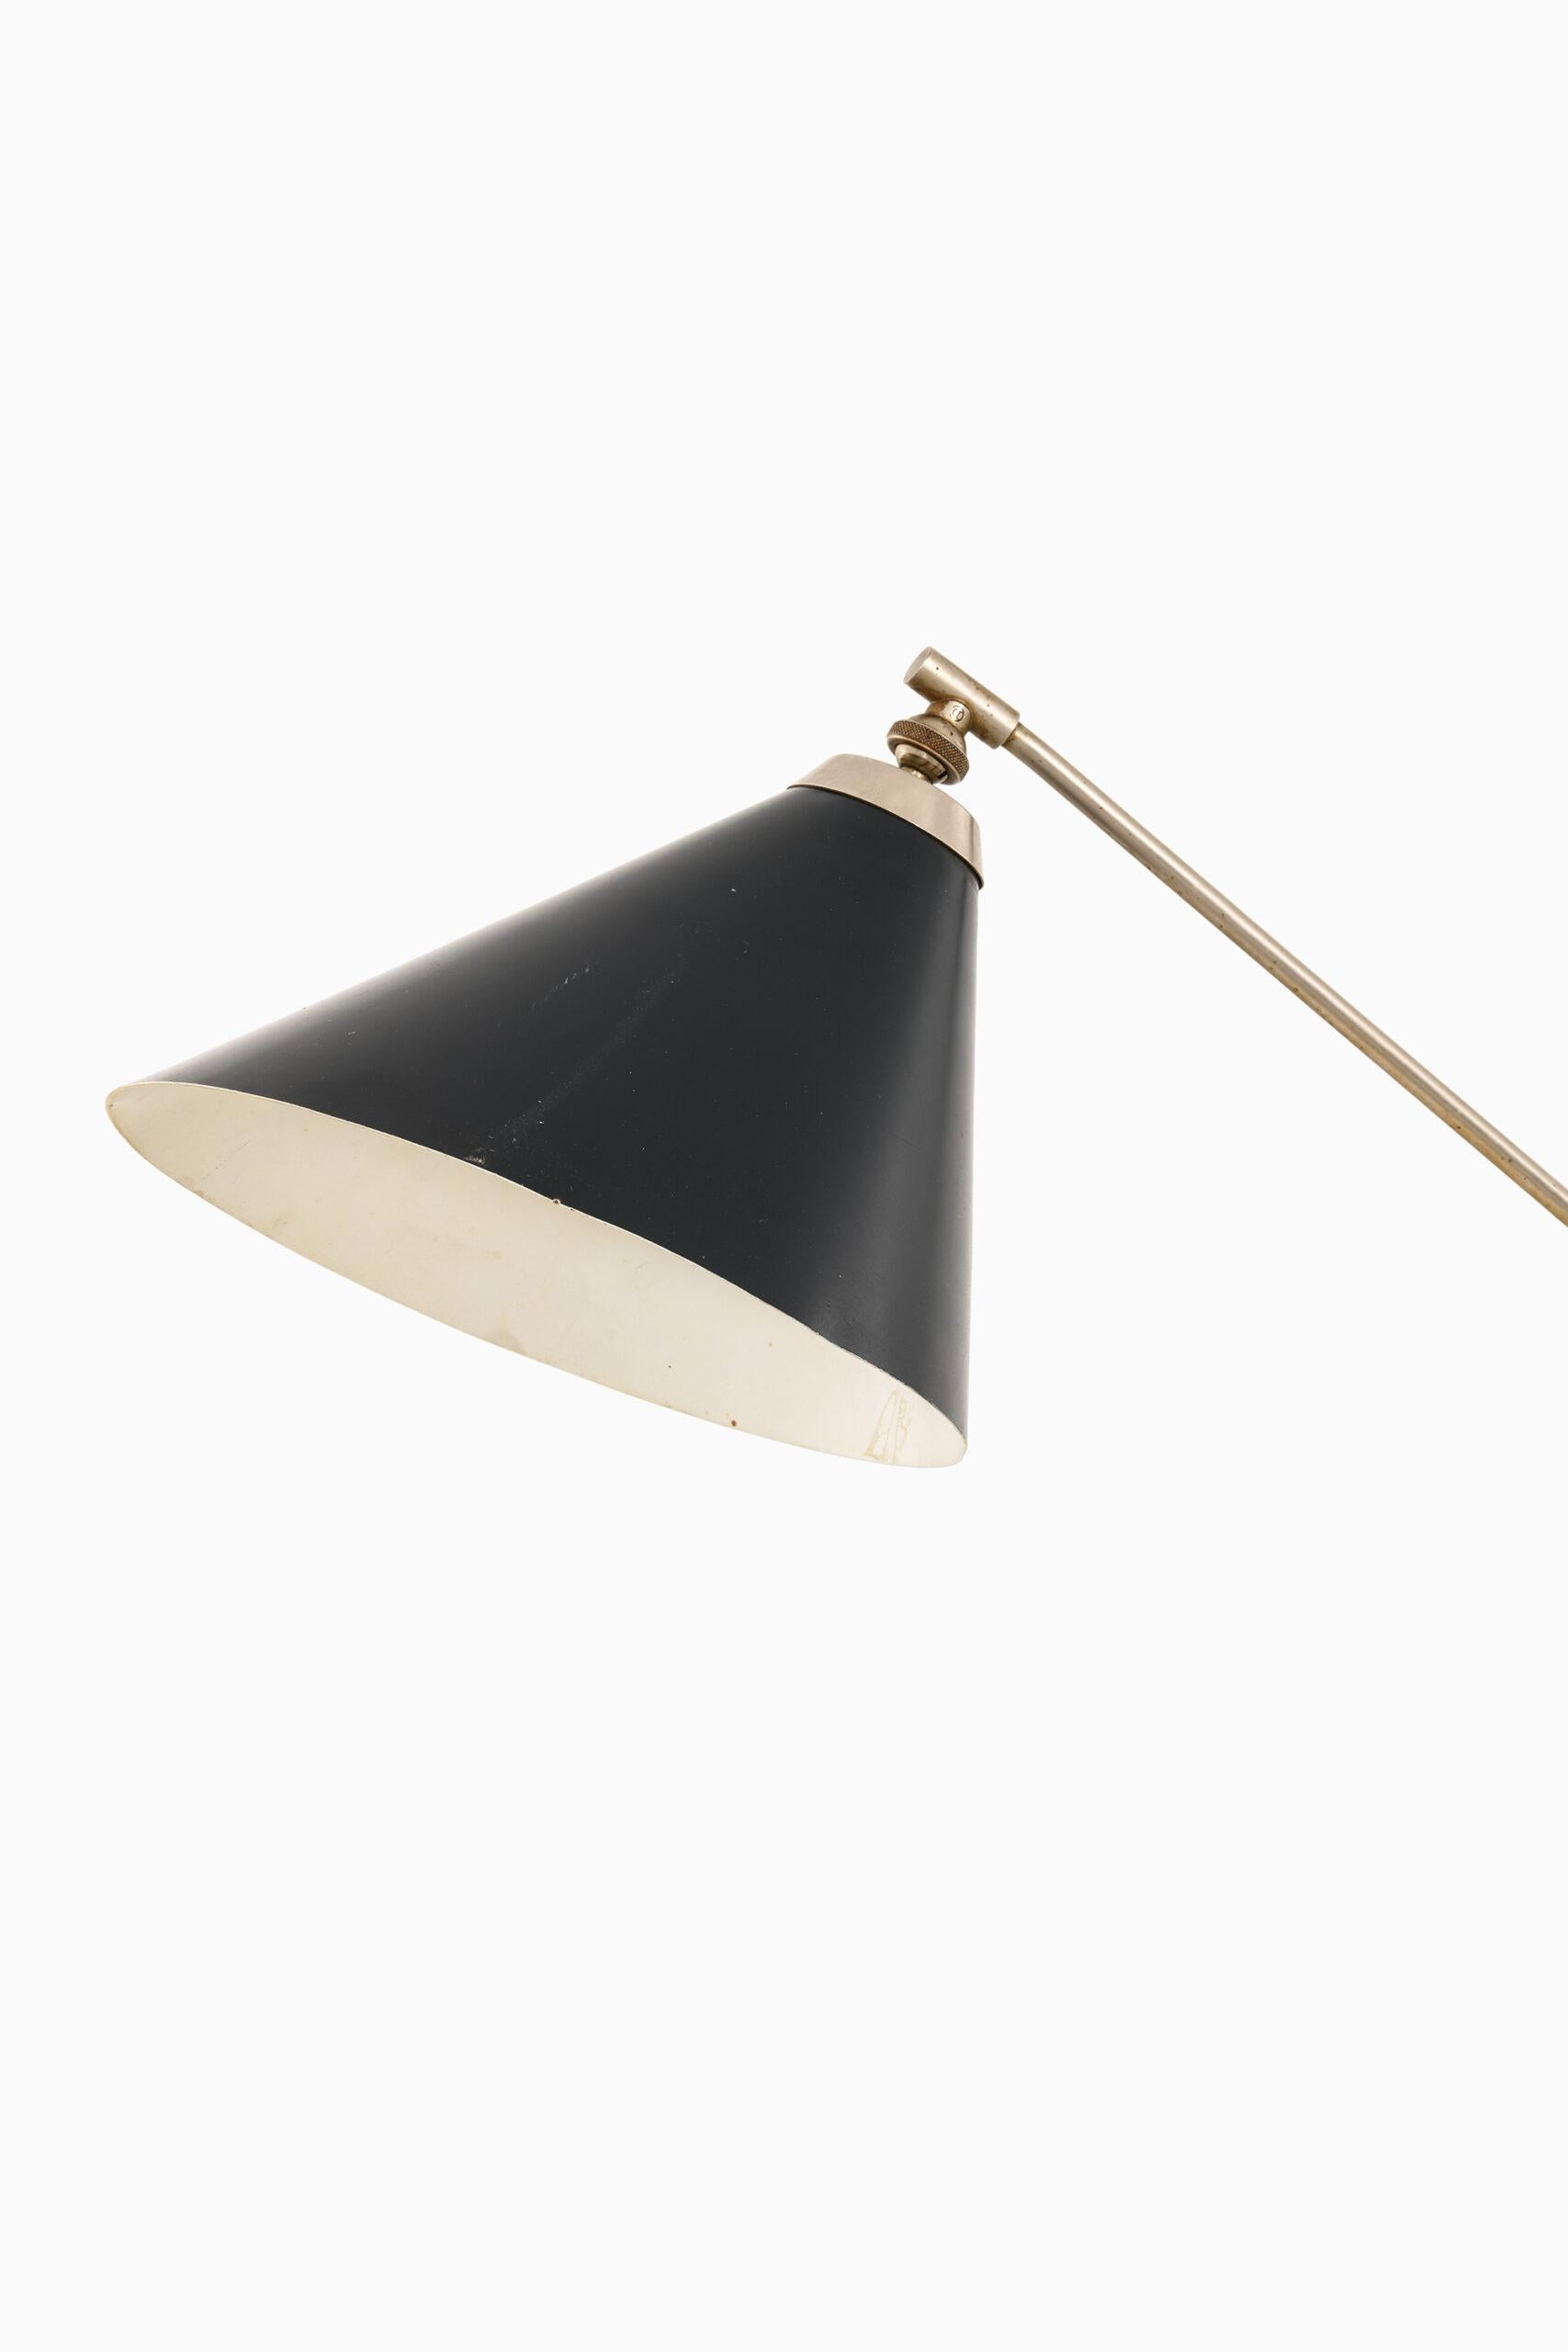 Scandinavian Modern Poul Dinesen Table Lamp Produced in Denmark For Sale